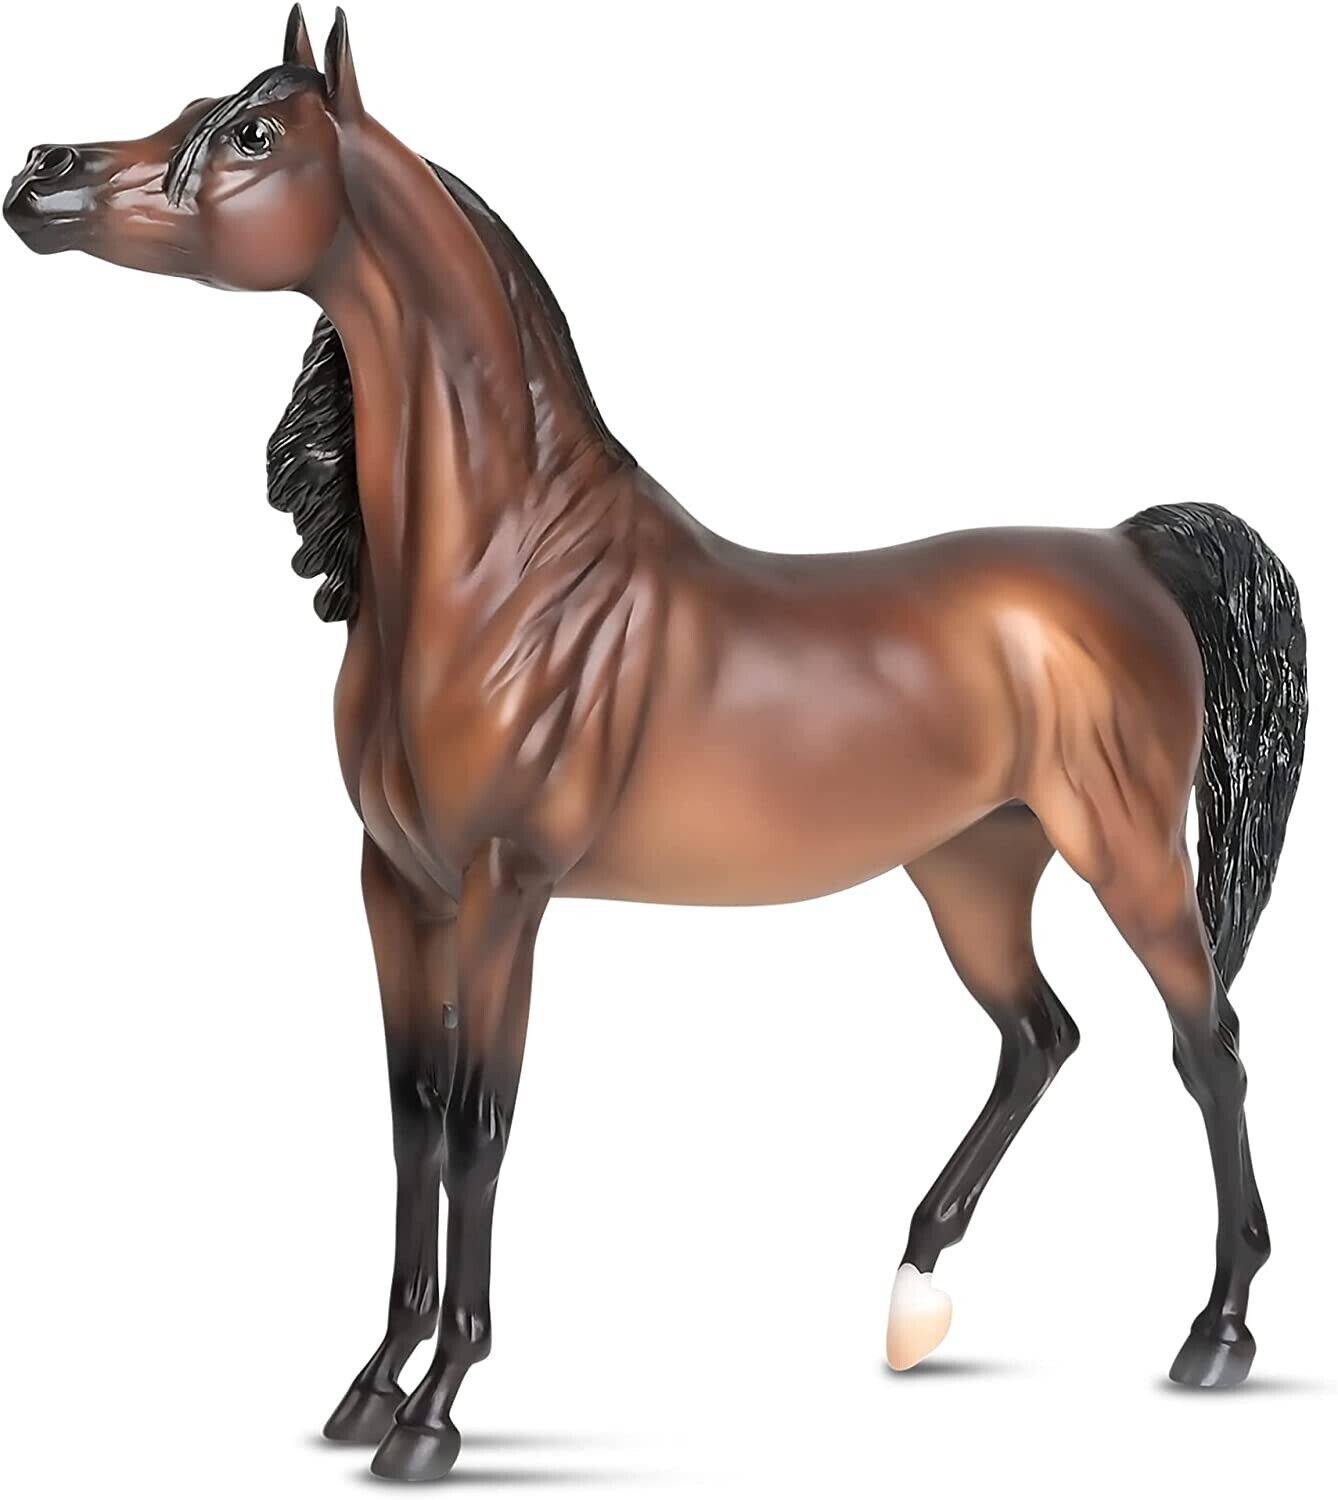 Breyer Horses Traditional Series RD Marciea Bey Champion Arabian Mare #1873